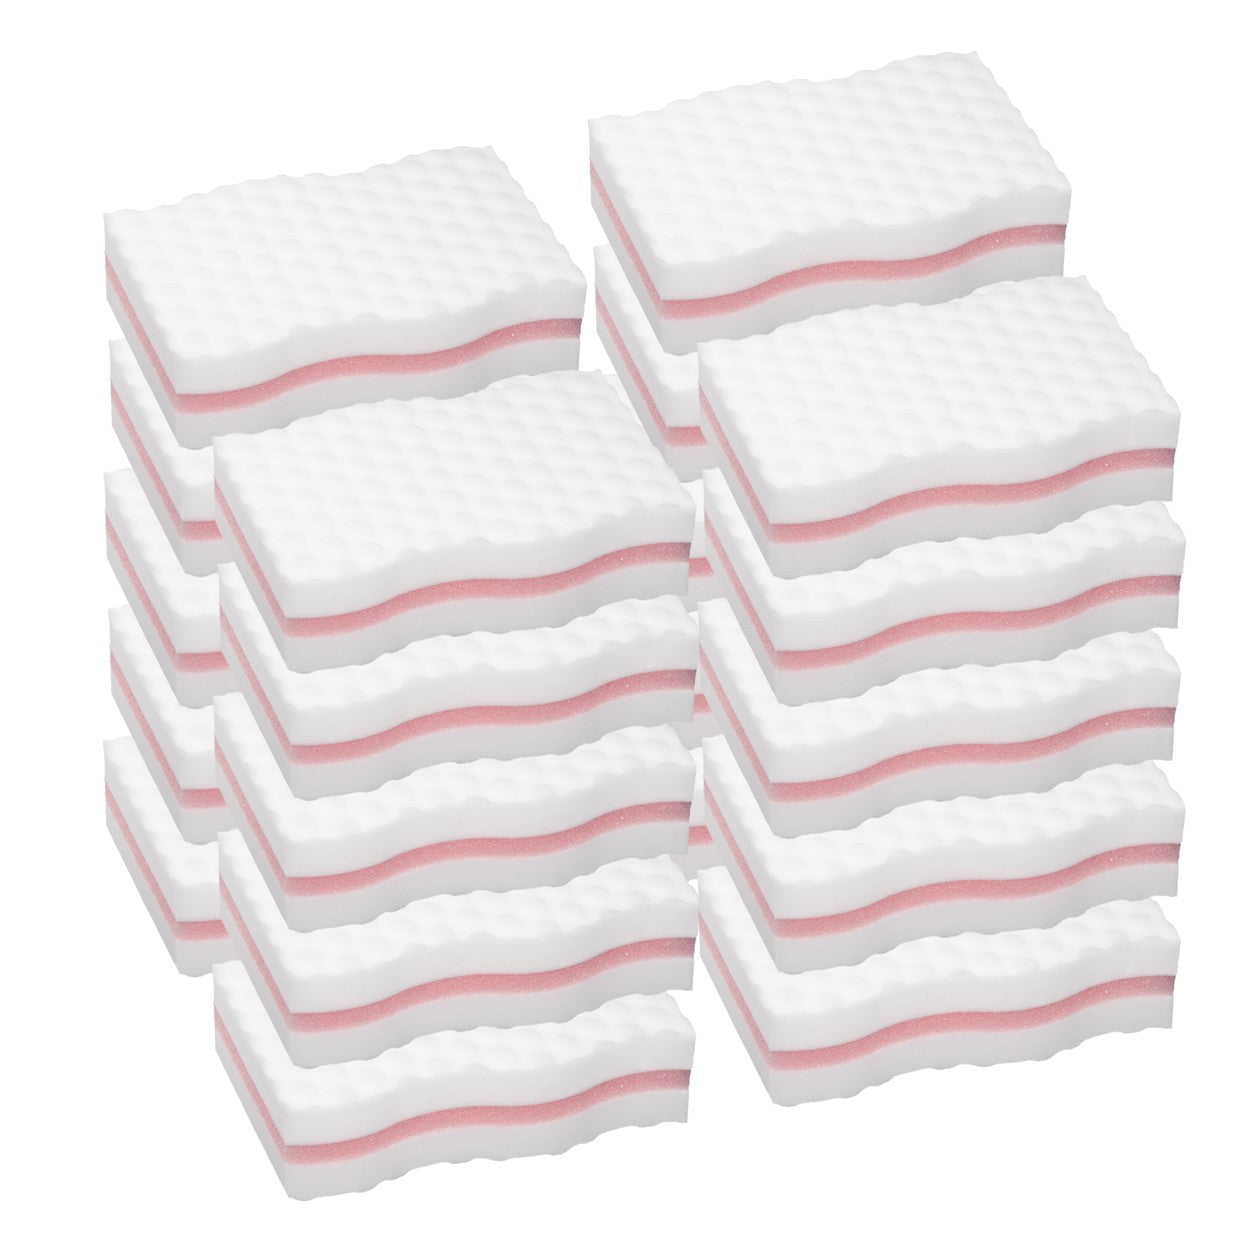 LTWHOME Cuty Pink Interlayer Magic Cleaning Wave Type Sponge High Density Melamine Foam 3.93 Inch X 2.36 Inch X 1 Inch (Pack of 20)